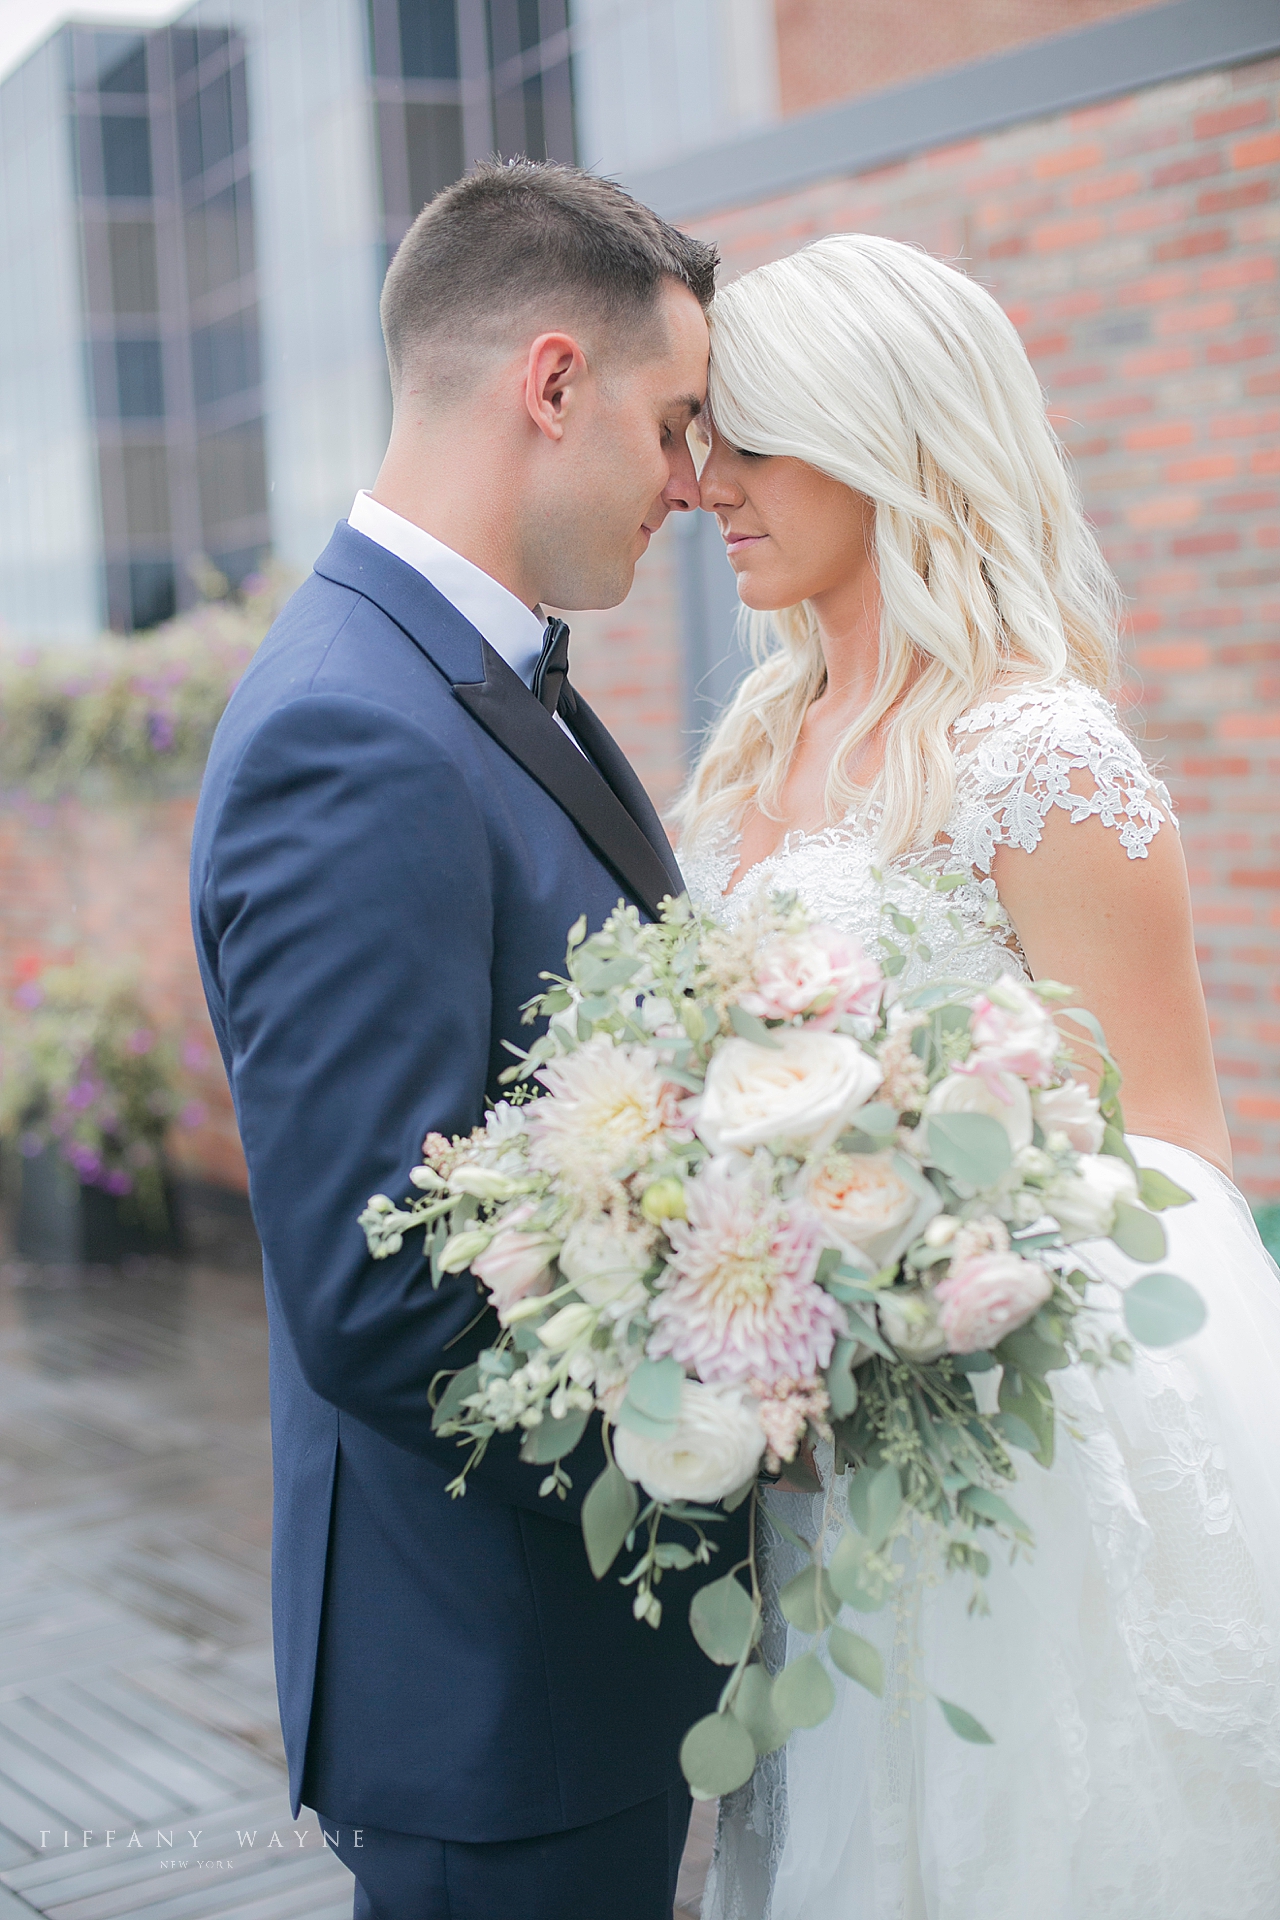 wedding photographer Tiffany Wayne Photography captures bride and groom